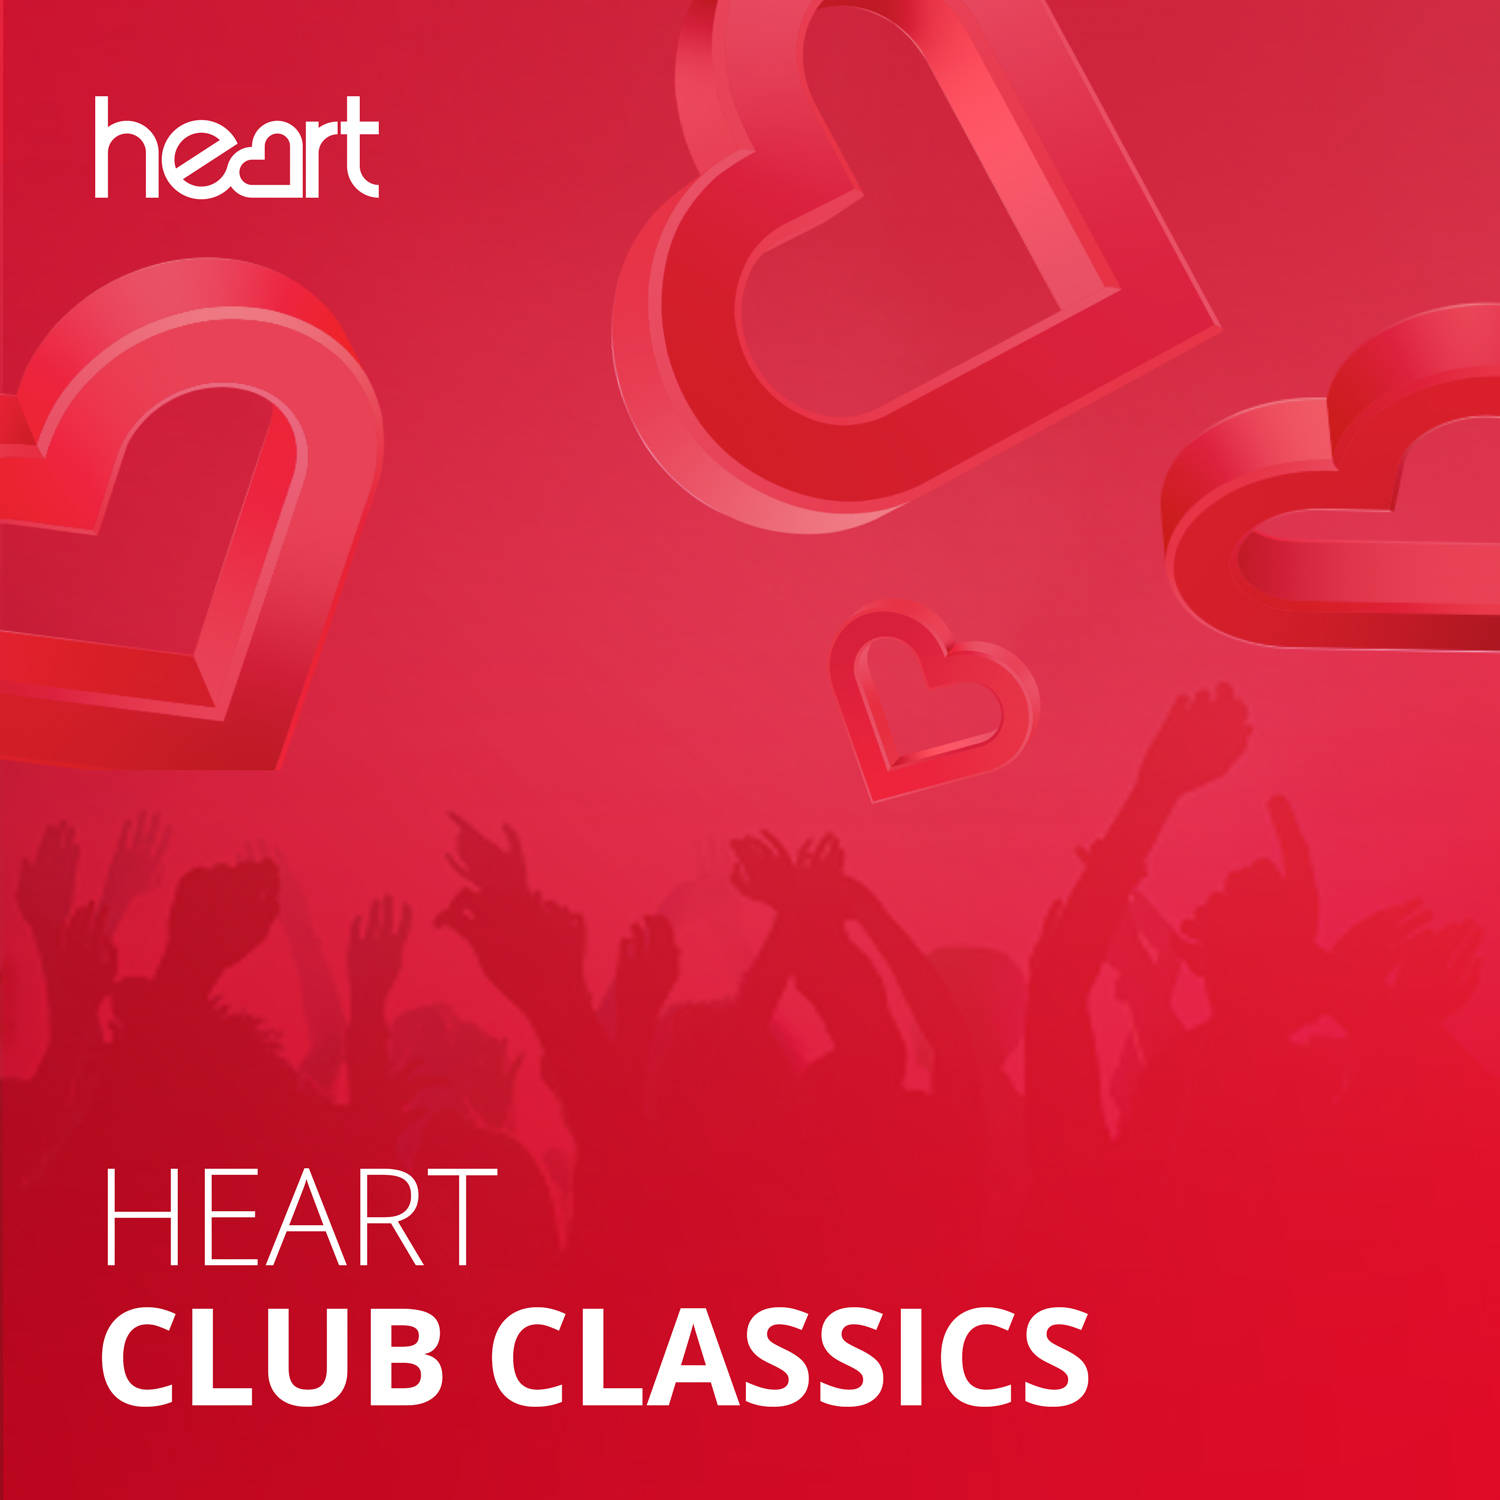 Heart Club Classics image